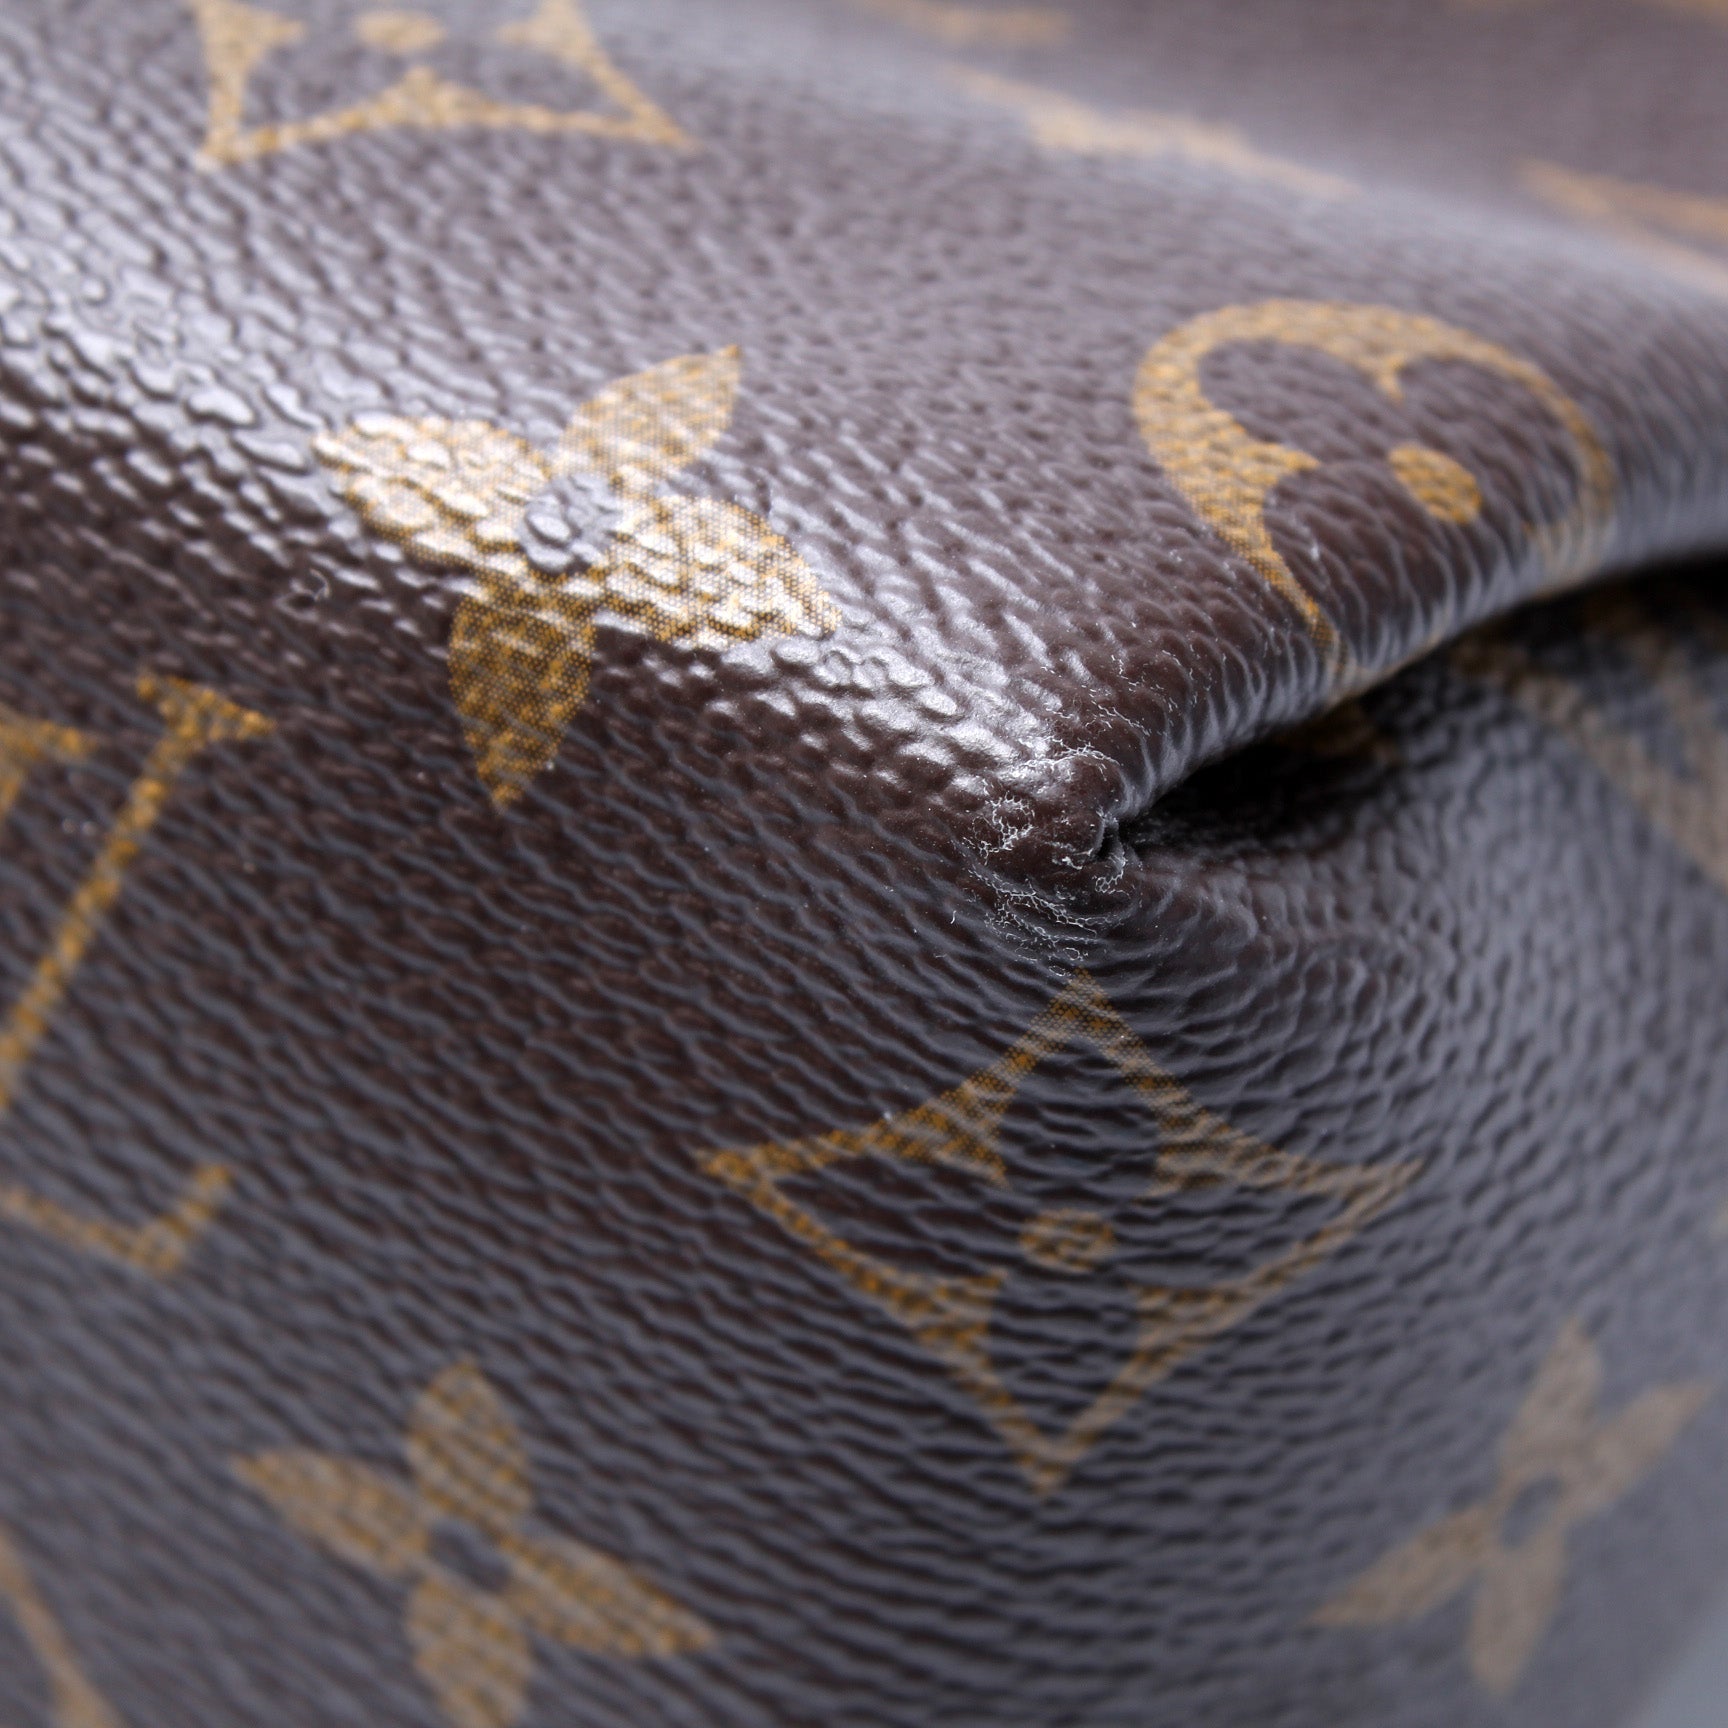 Luxury Handbags LOUIS VUITTON Monogram Pallas Beauty Case 810